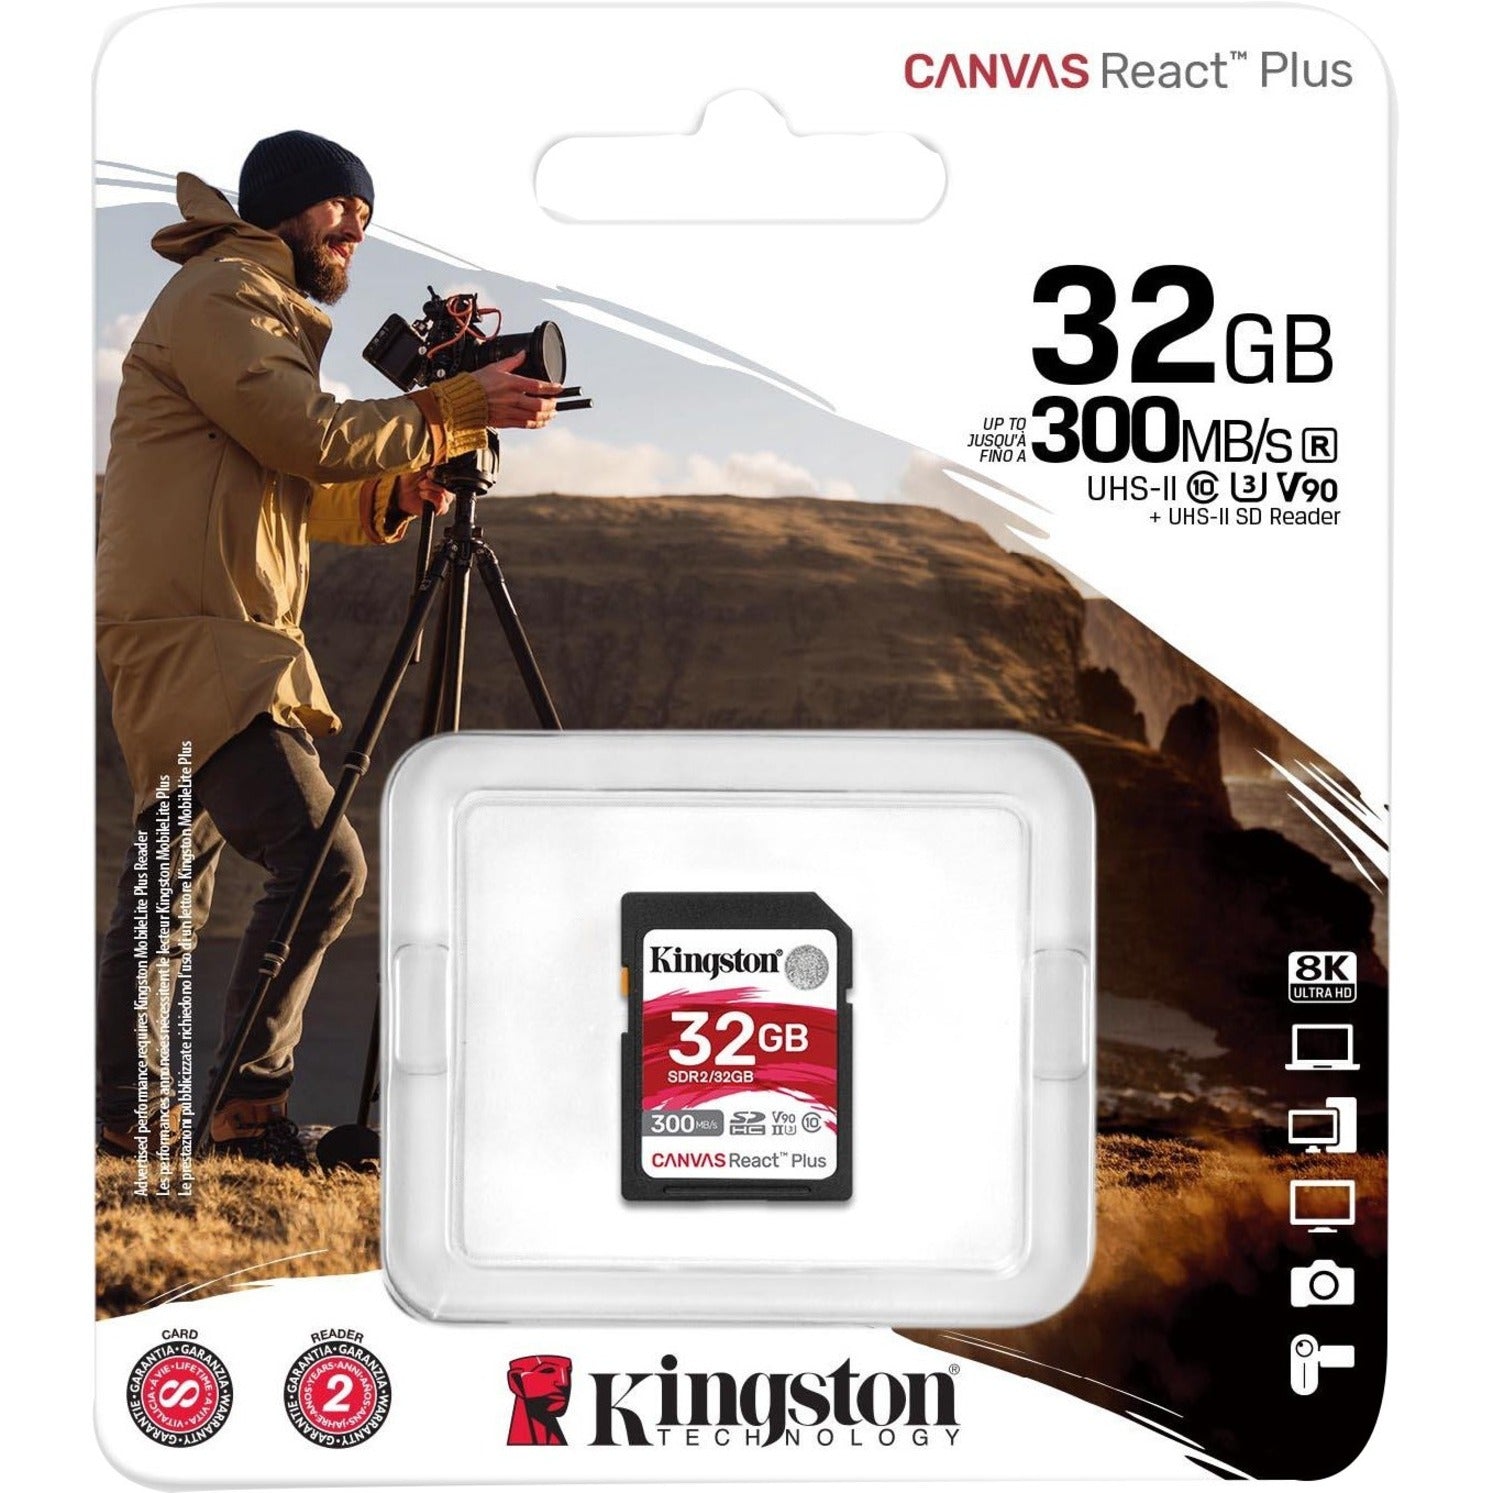 Kingston SDR2/32GB Canvas React Plus 32GB SDHC Card, 300 MB/s Read Speed, V90 Video Speed Class